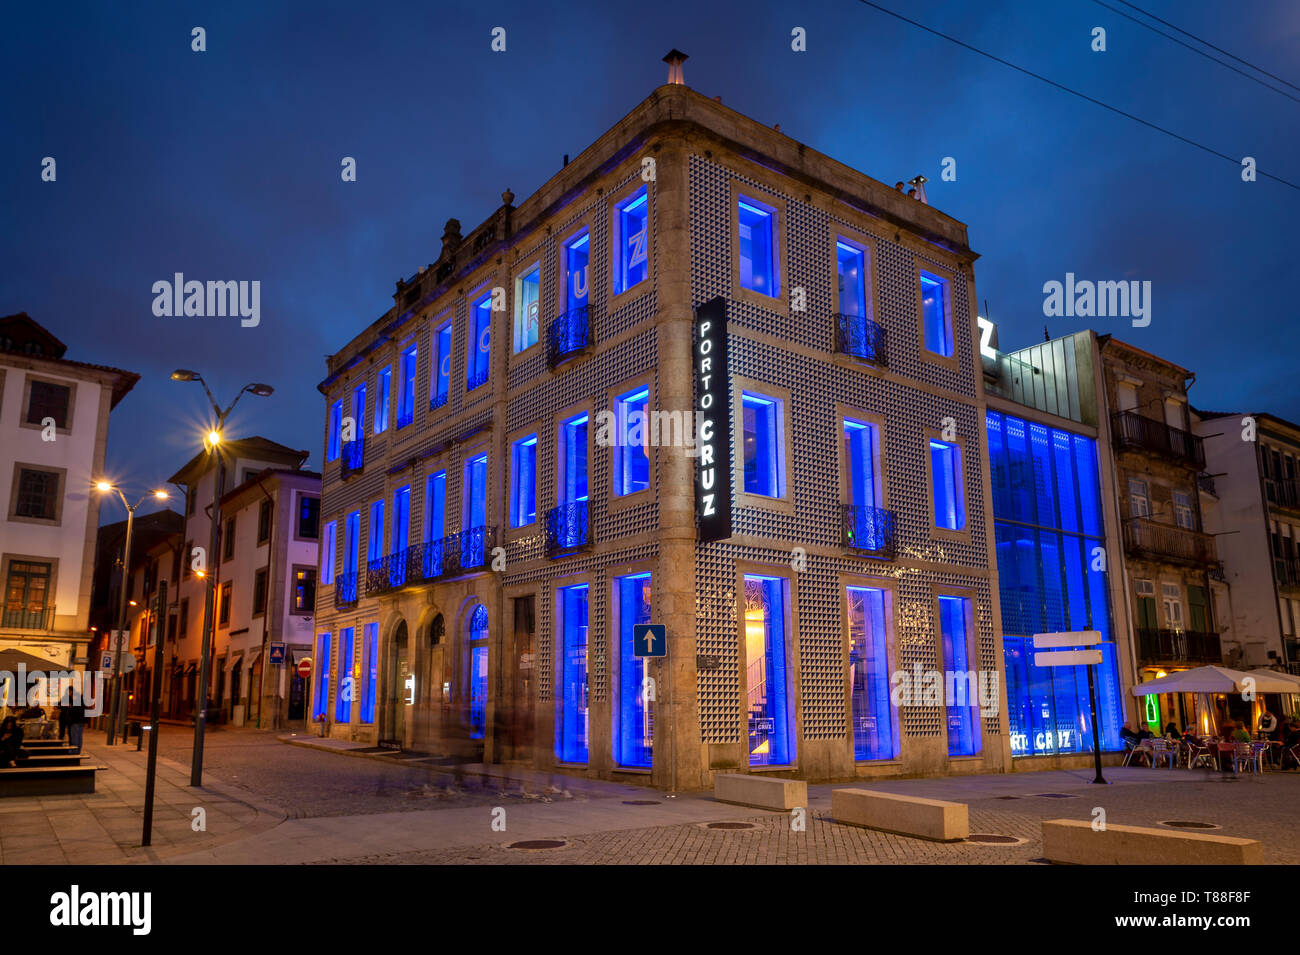 The Porto Cruz restaurant and bar illuminated at night in Vila Nova de Gaia, Porto, Portugal Stock Photo